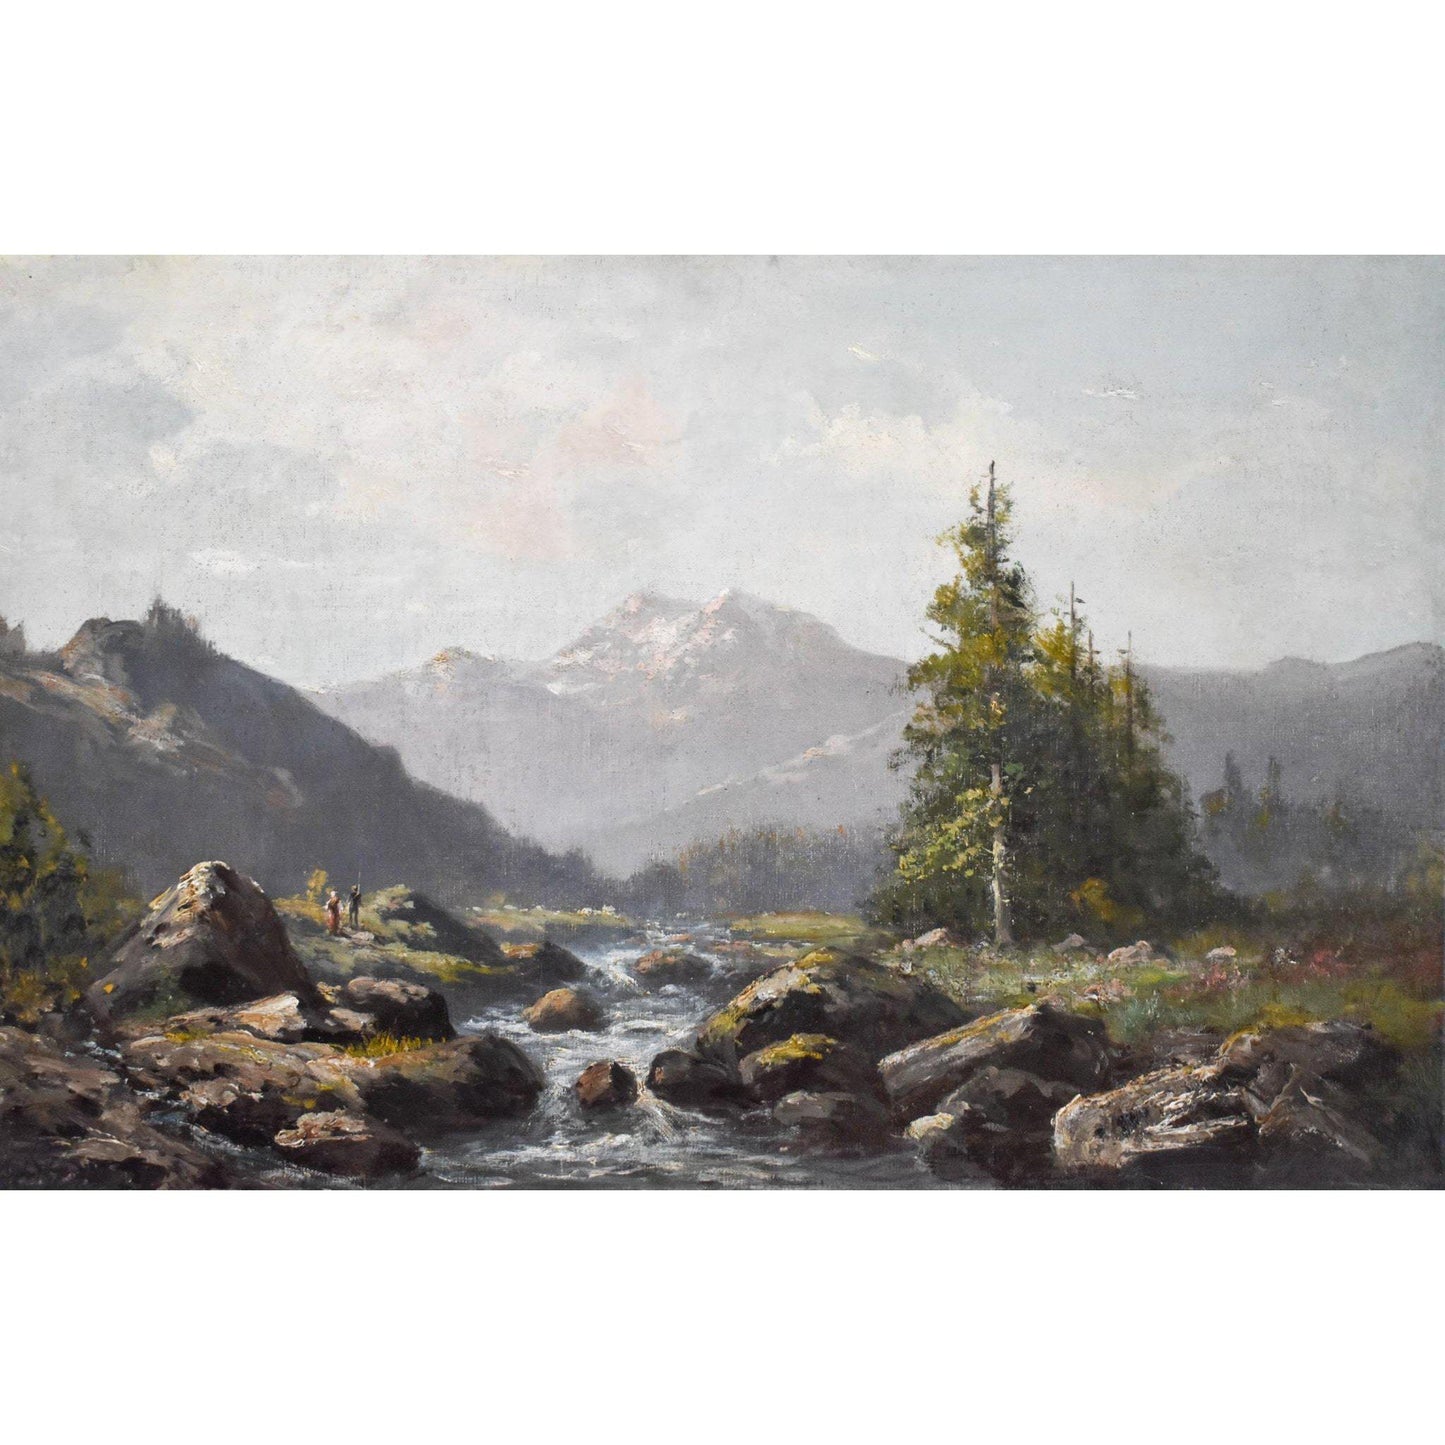 Antique landscape oil painting mountain alps view circa 1870 by Leberecht Lortet for sale at Winckelmann Gallery